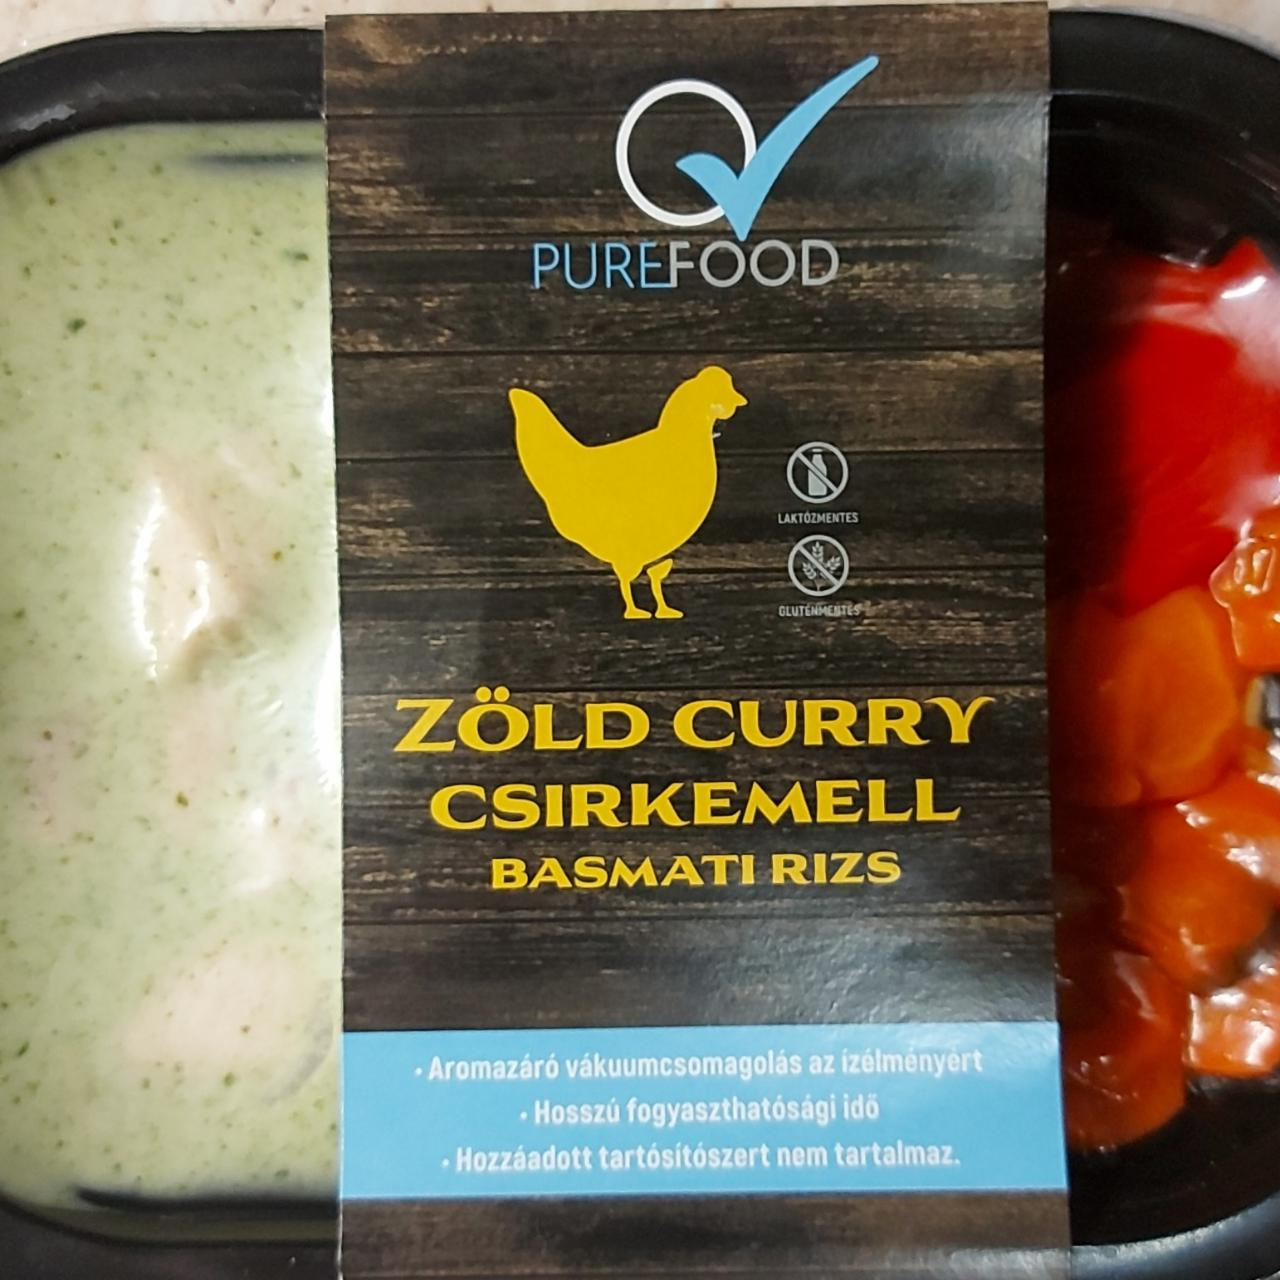 Képek - Zöld curry csirkemell basmati rizs PureFood